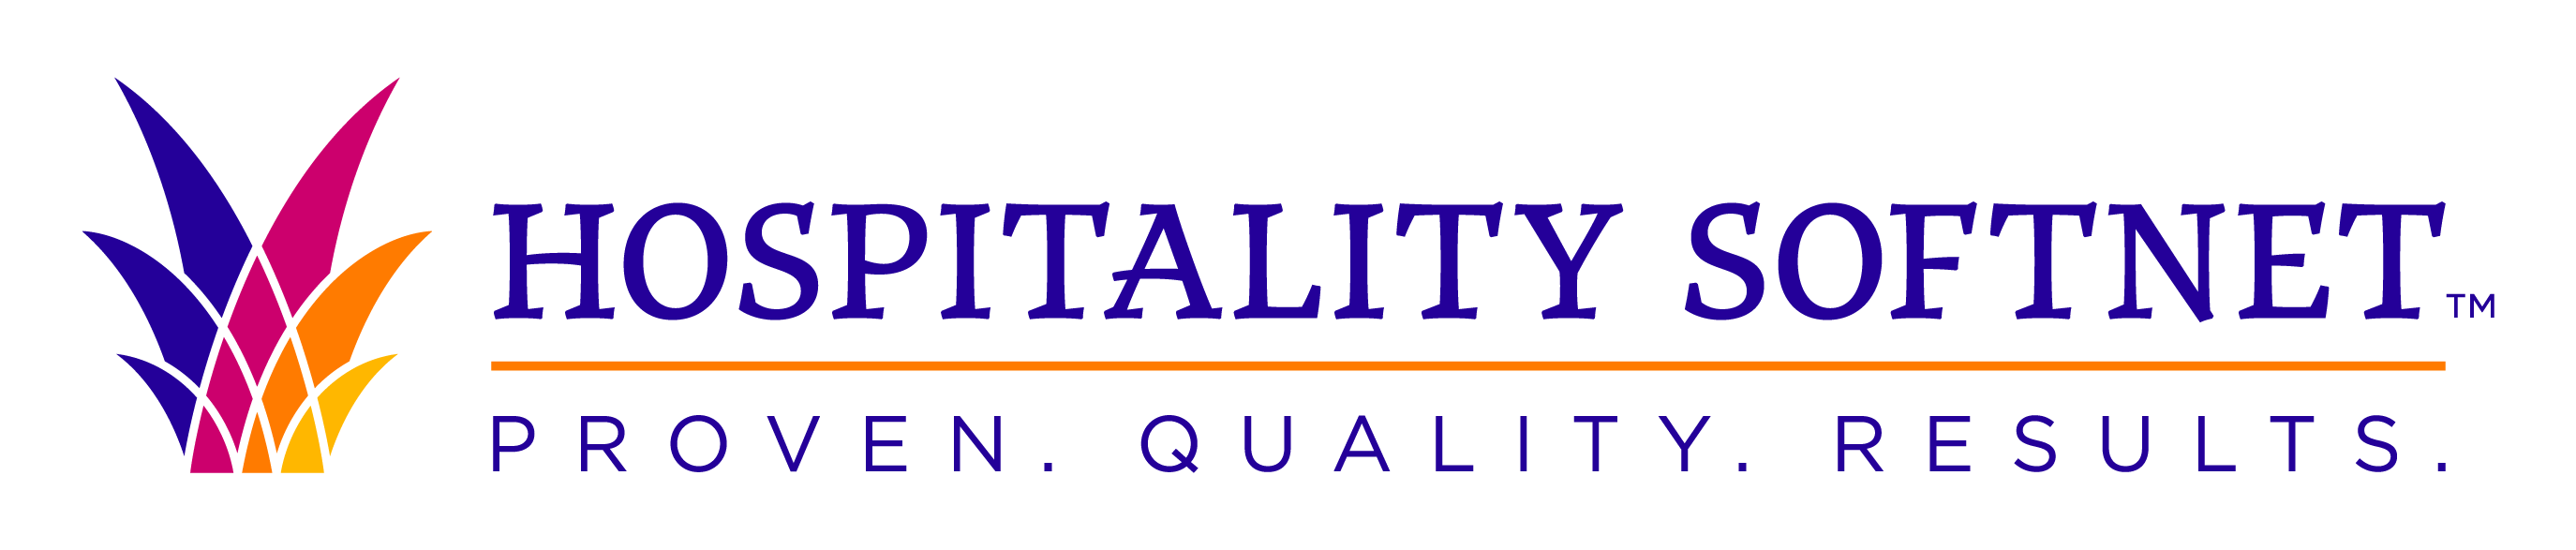 Logo for Hospitality Softnet - Dallas